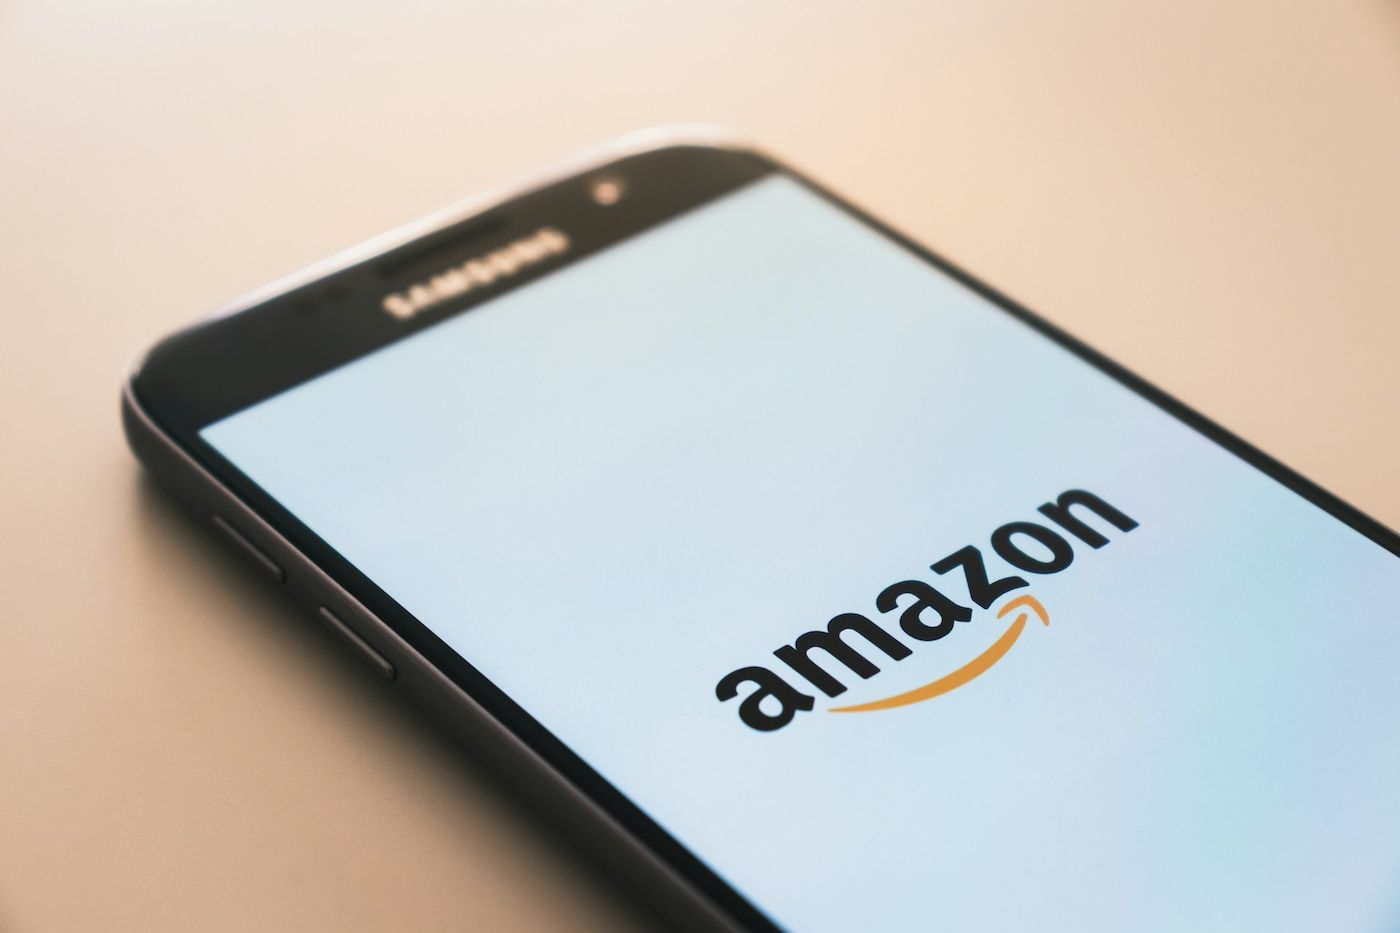 Amazon logo displayed on phone screen hero image